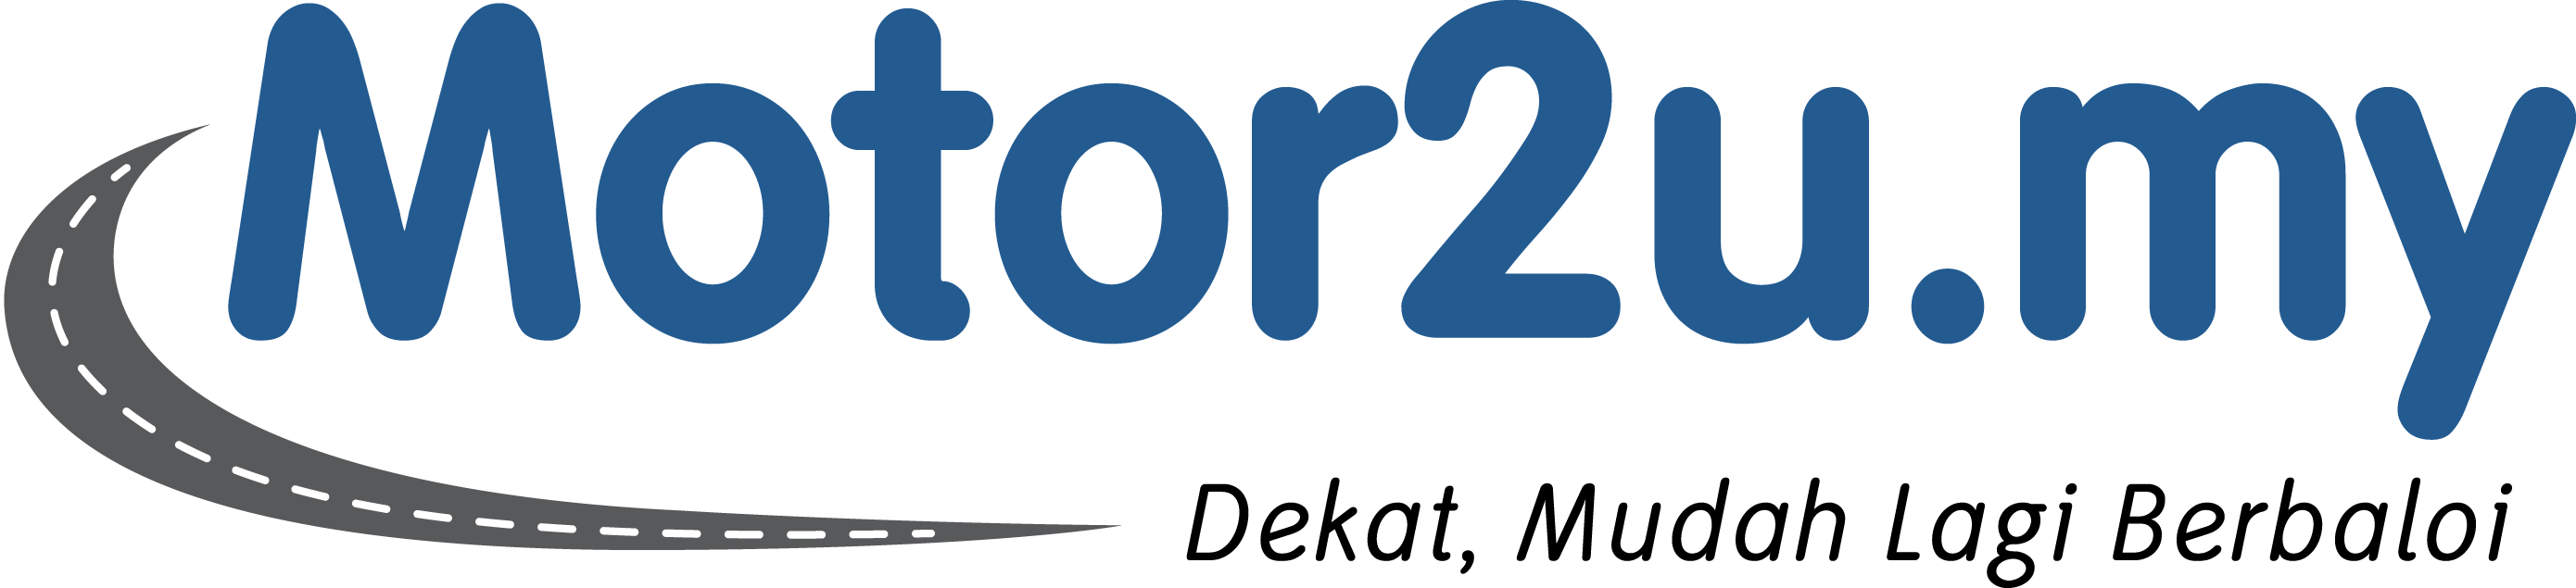 motor2u logo